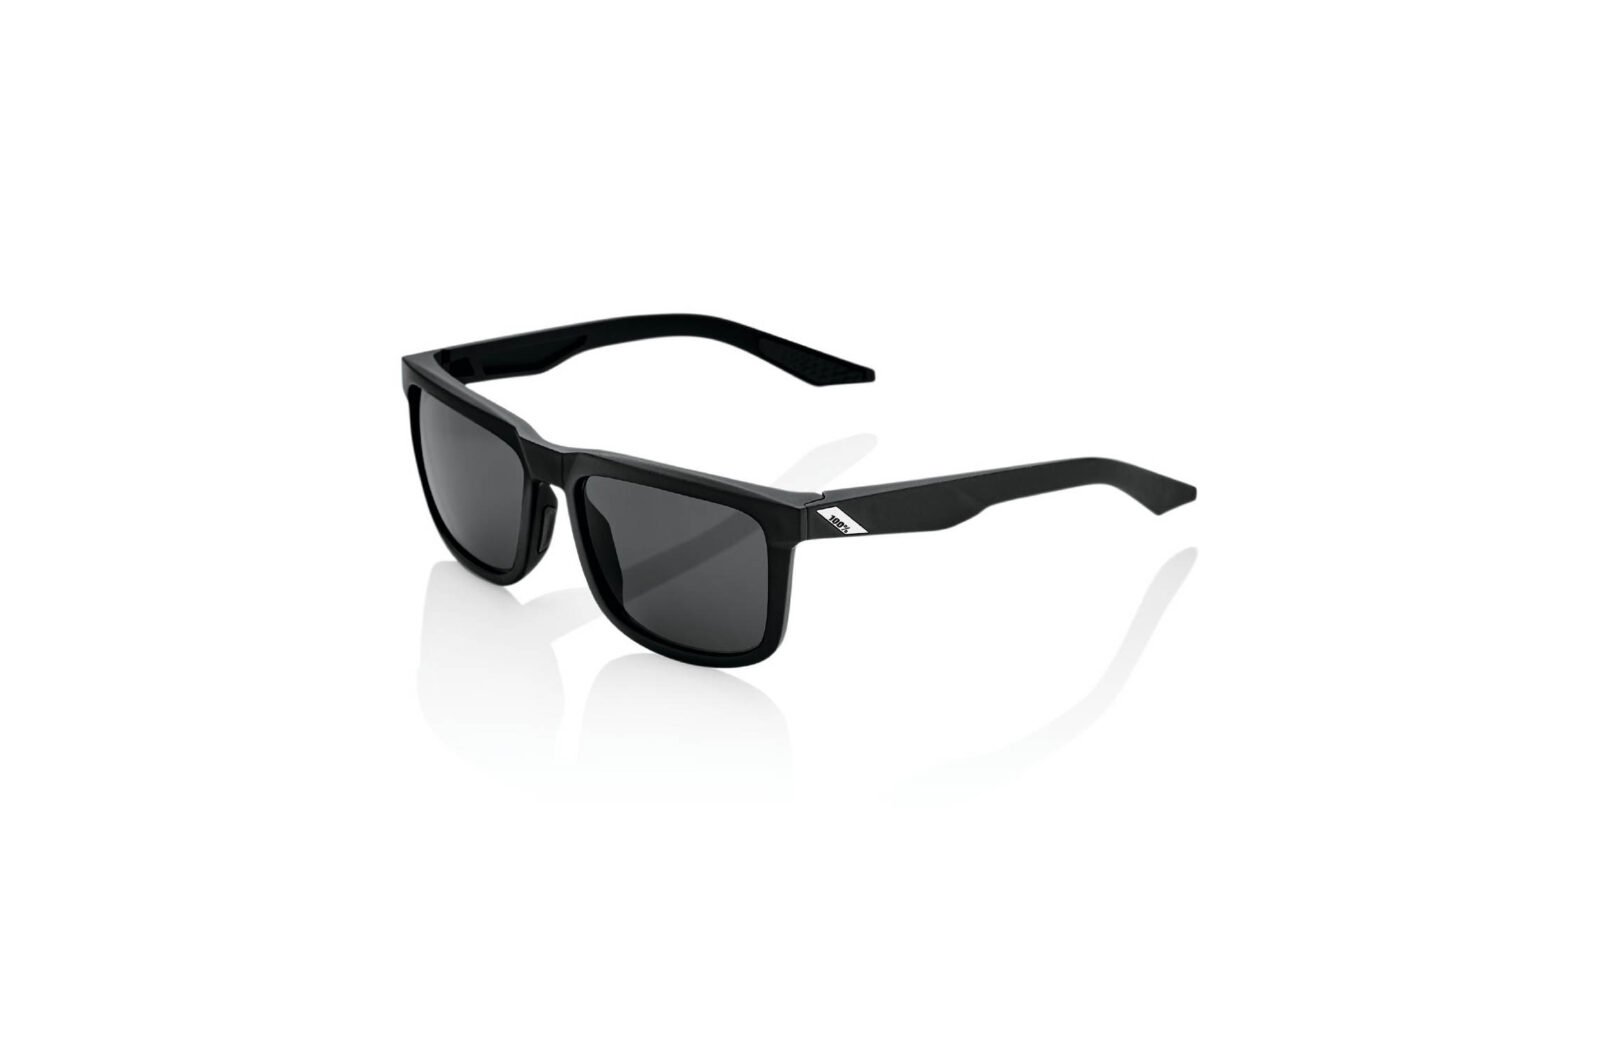 100% Blake Sunglasses - Impact-Resistant Motorcycle Eyewear